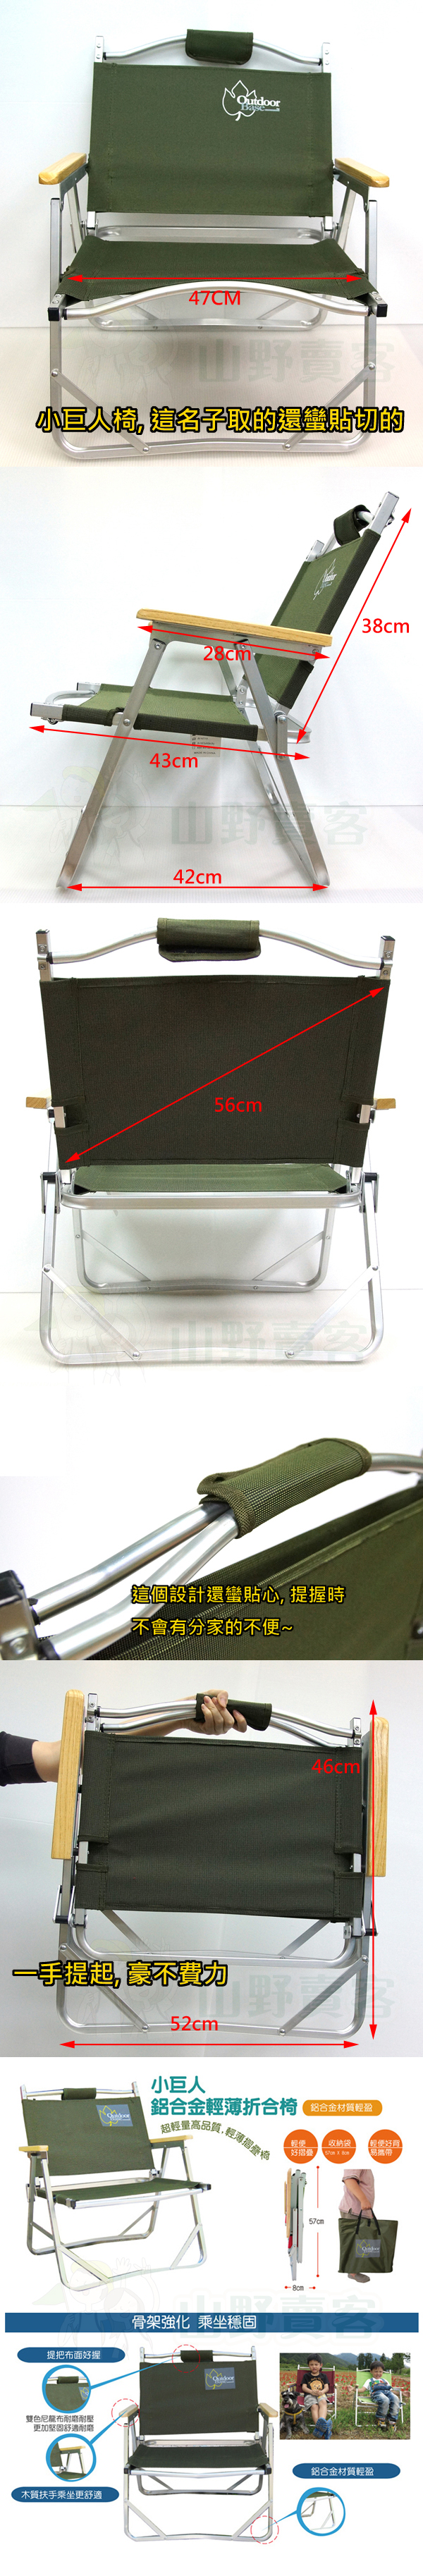 Outdoorbase 小巨人超薄摺疊椅-綠色 扶手折疊椅 鋁合金 戶外 露營 25070